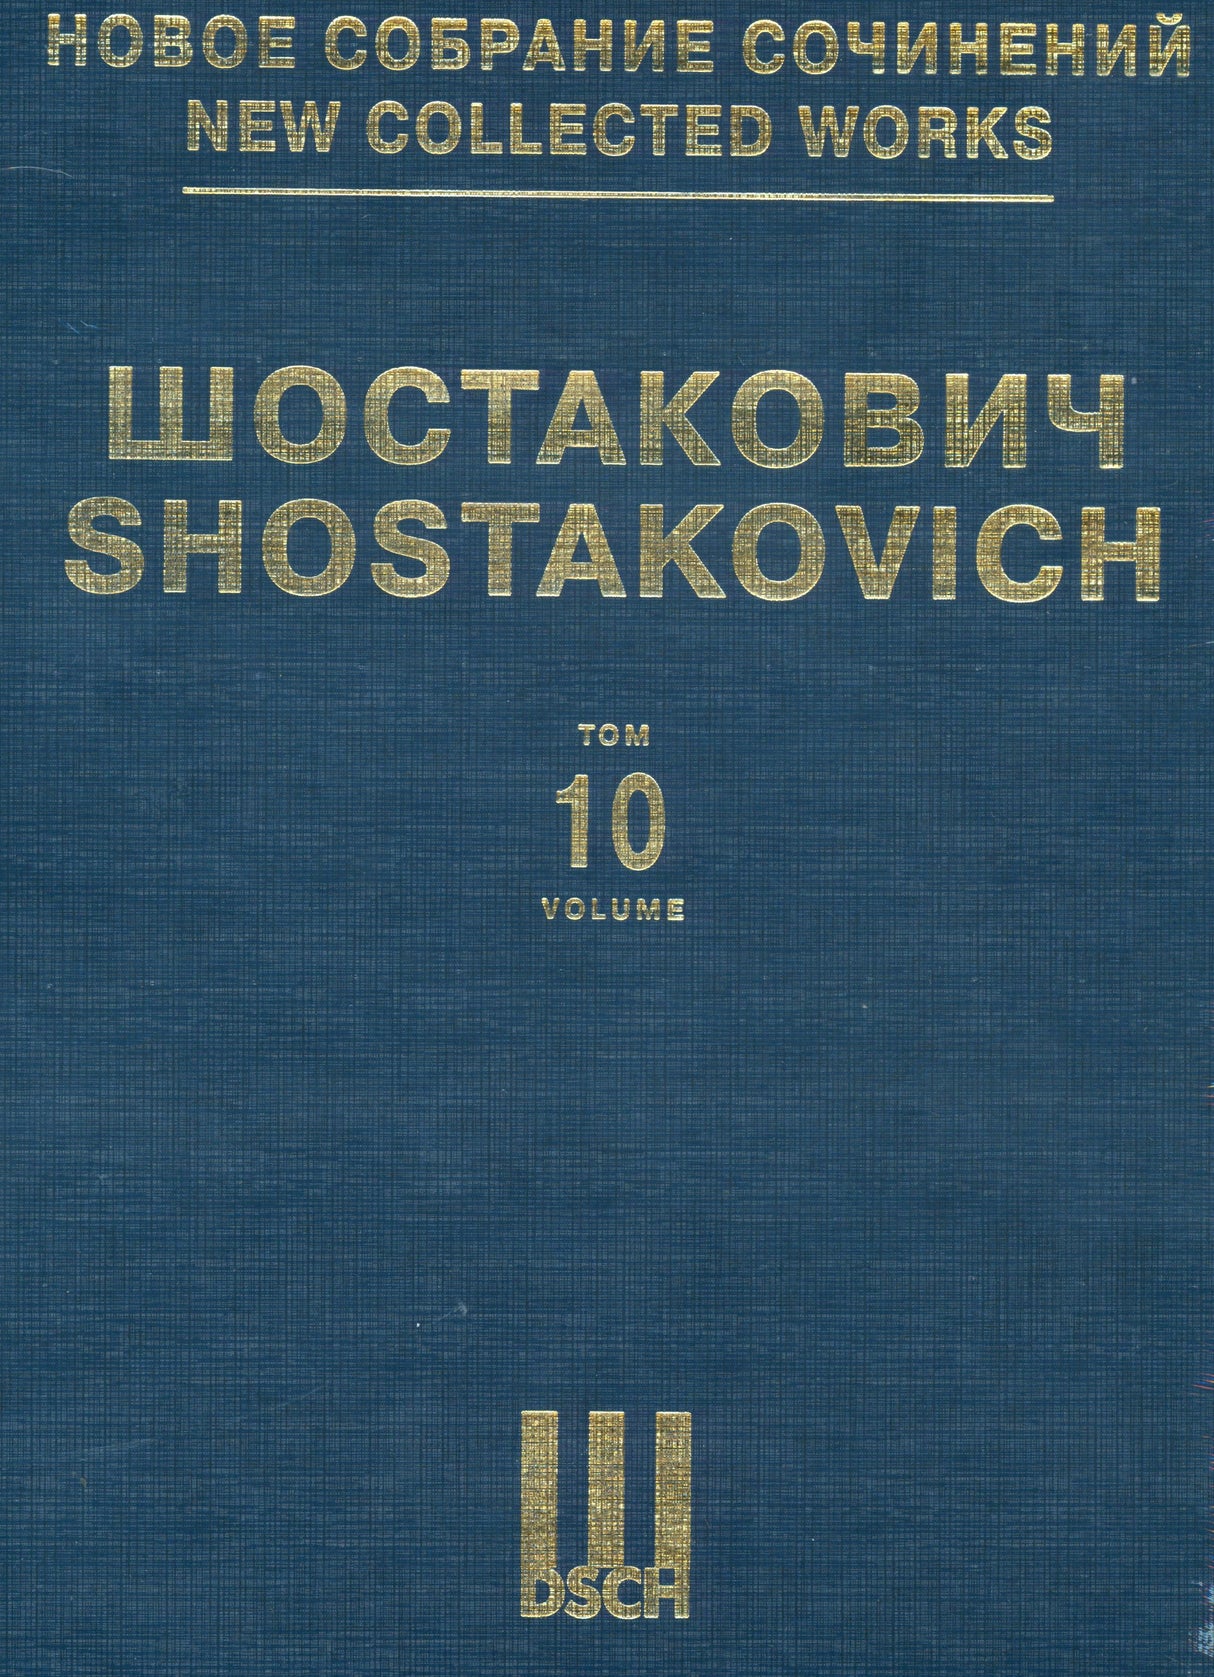 Shostakovich: Symphony No. 10, Op. 93